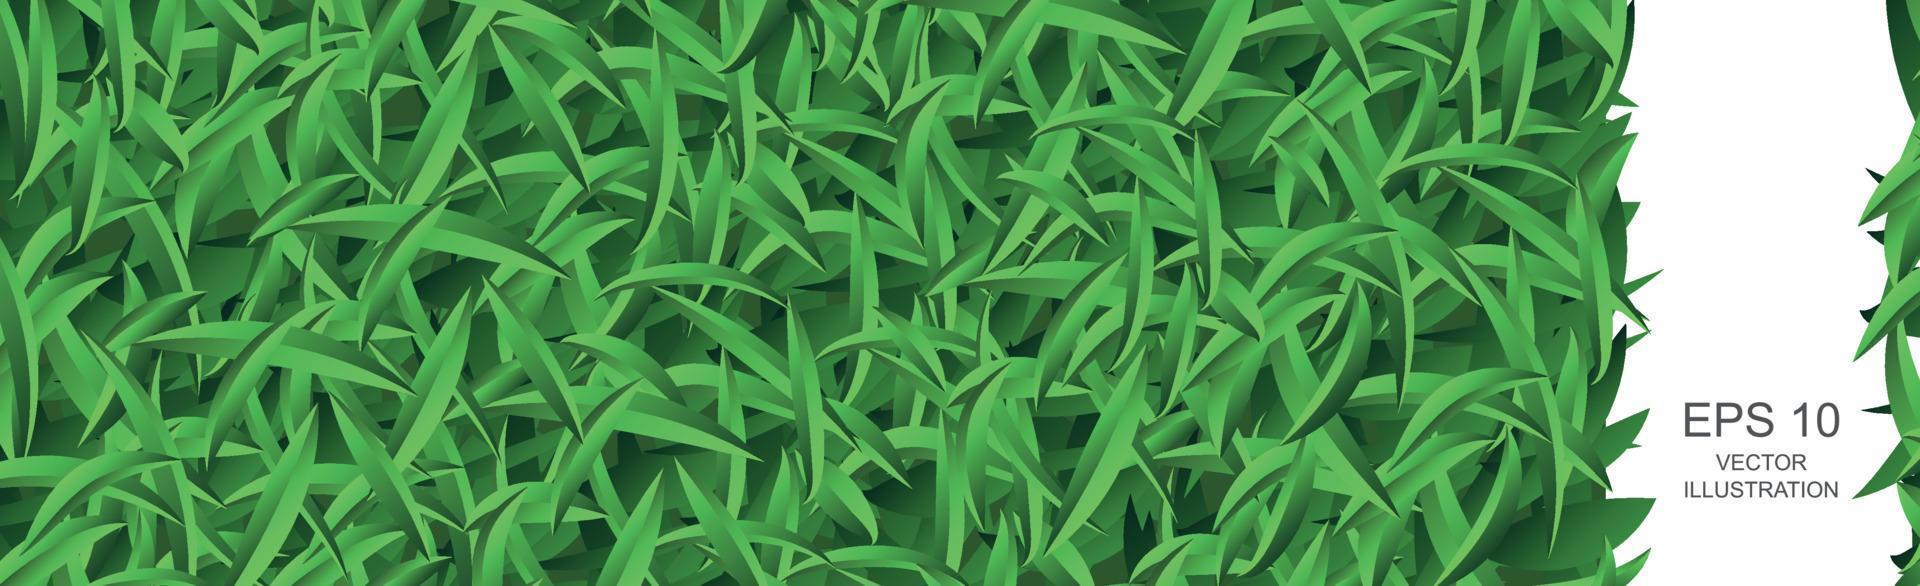 textura de modelo de plano de fundo panorâmico prado verde realista - vetor